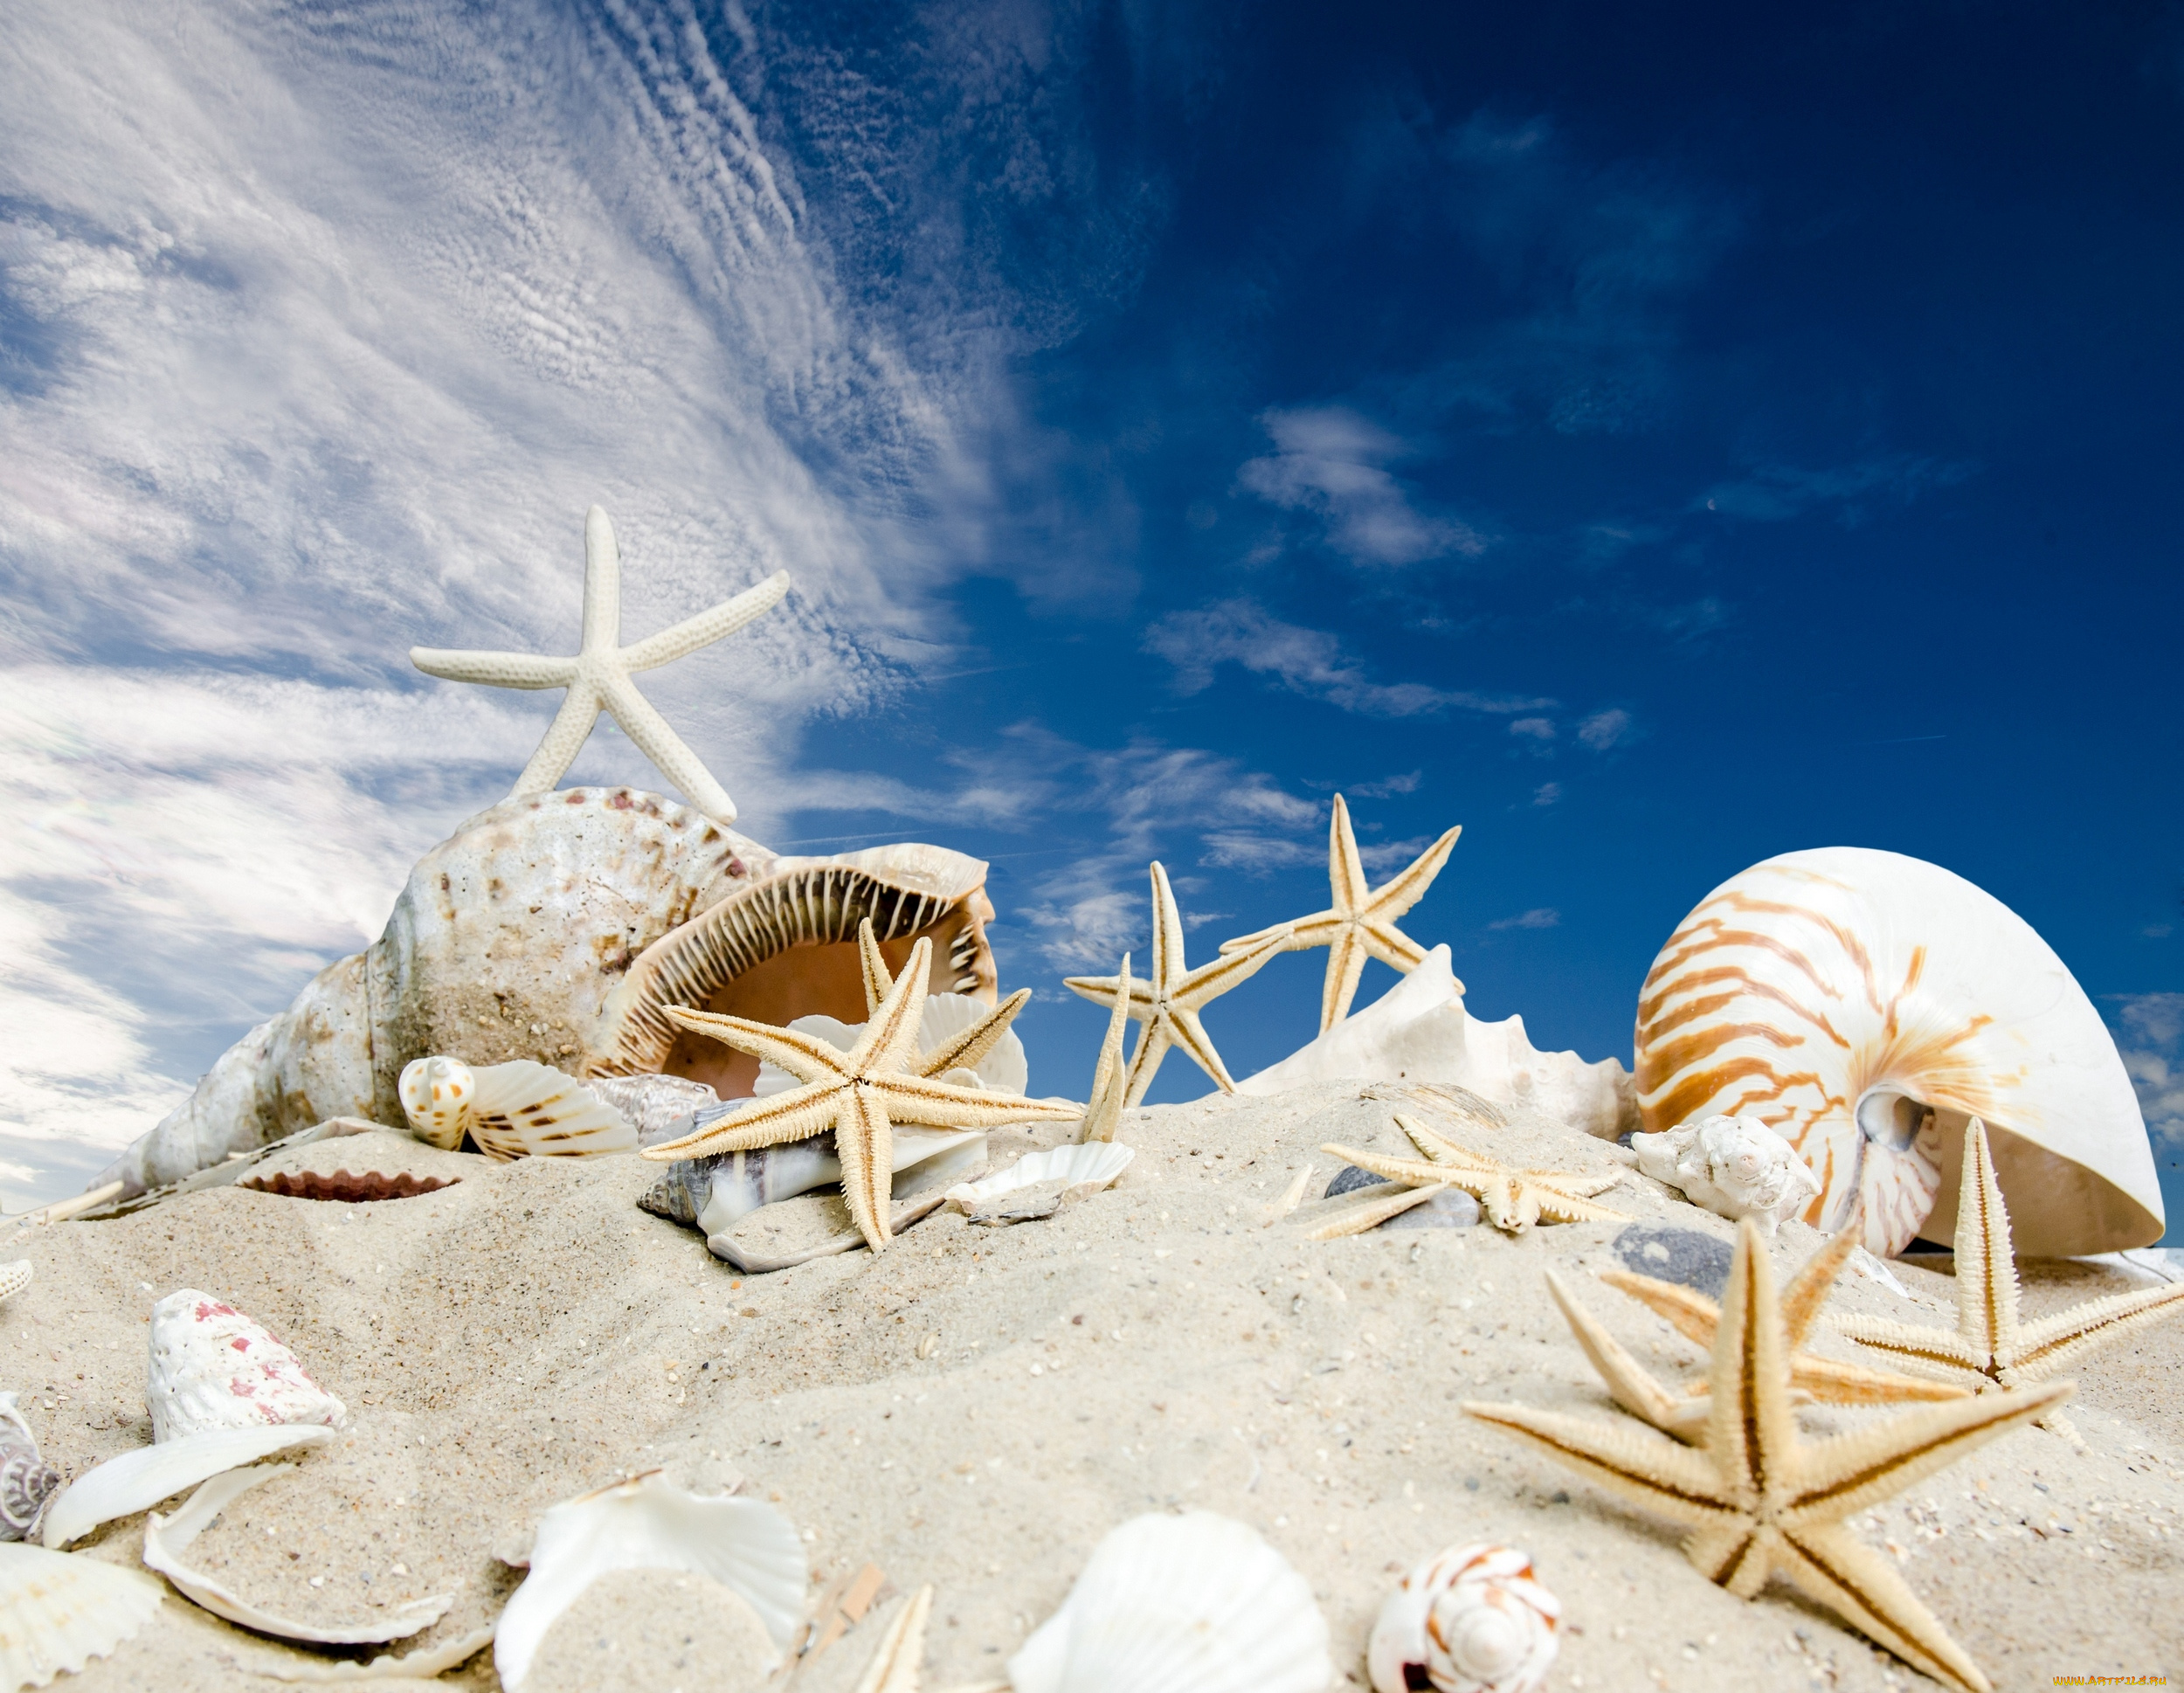 разное, ракушки, , кораллы, , декоративные, и, spa-камни, sky, sand, summer, sunshine, seashells, sea, beach, starfishes, песок, звезды, пляж, море, солнце